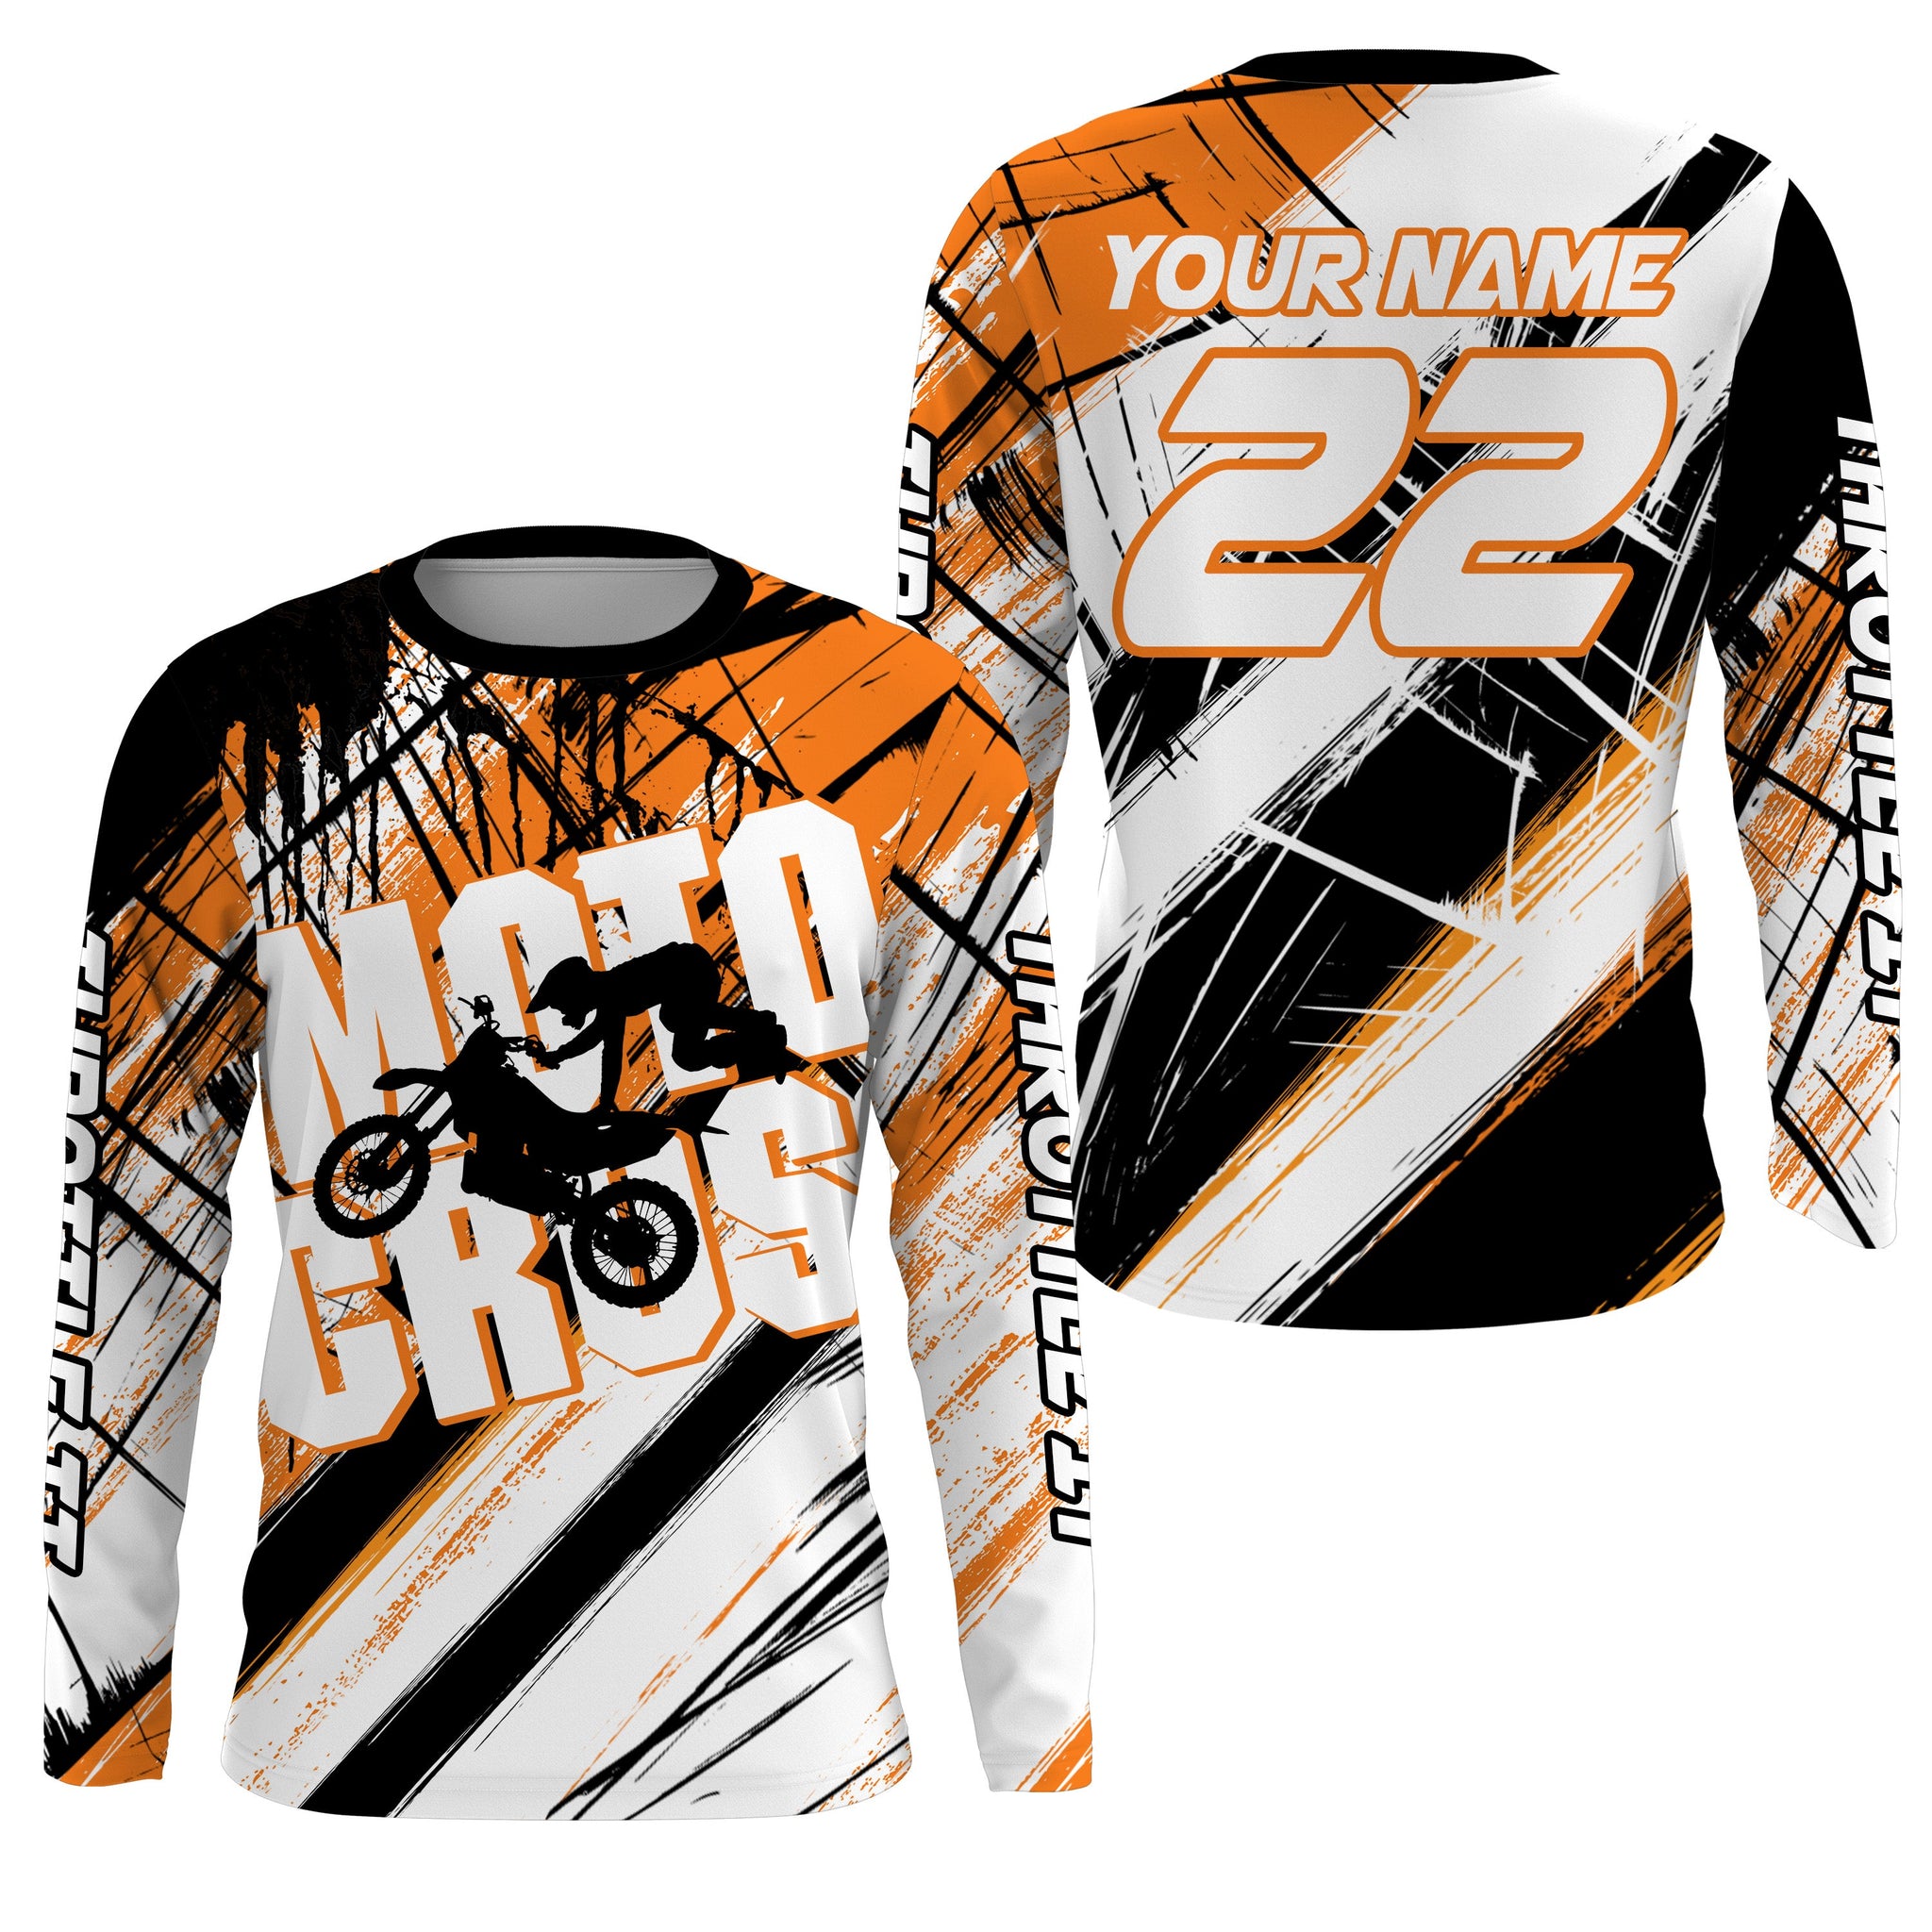 Personalized Motocross Jersey UPF30+ Throttle It Kid Adult Dirt Bike MX Racing Long Sleeves NMS1120